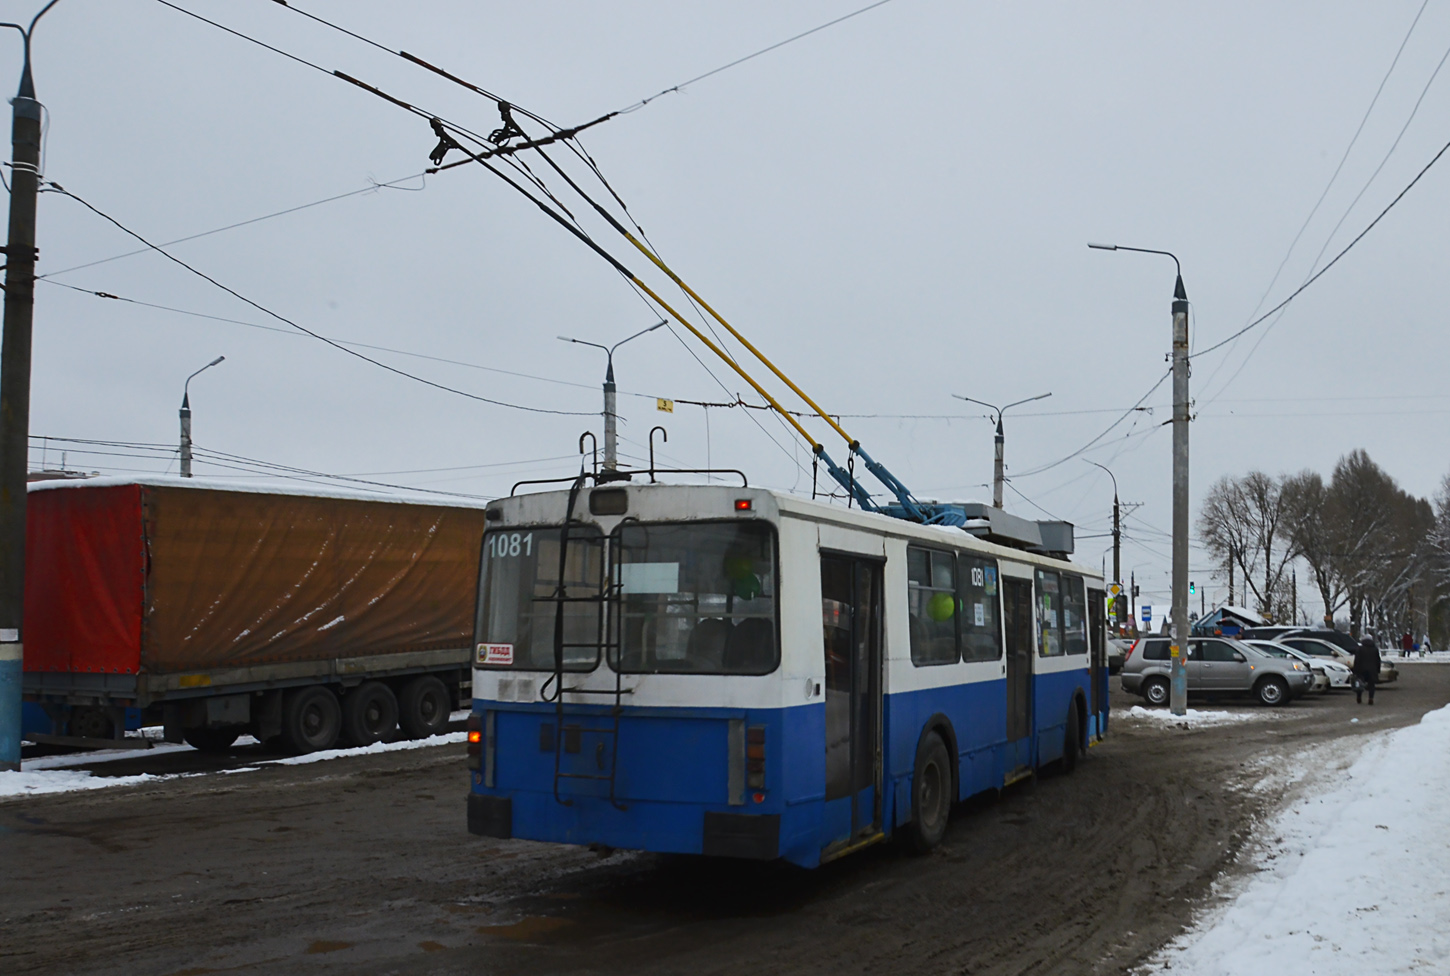 Brjanska, VZTM-5290.02 № 1081; Brjanska — Trolleybus parade 04.12.2020 in honor of the 60th anniversary of the trolleybus in Bryansk